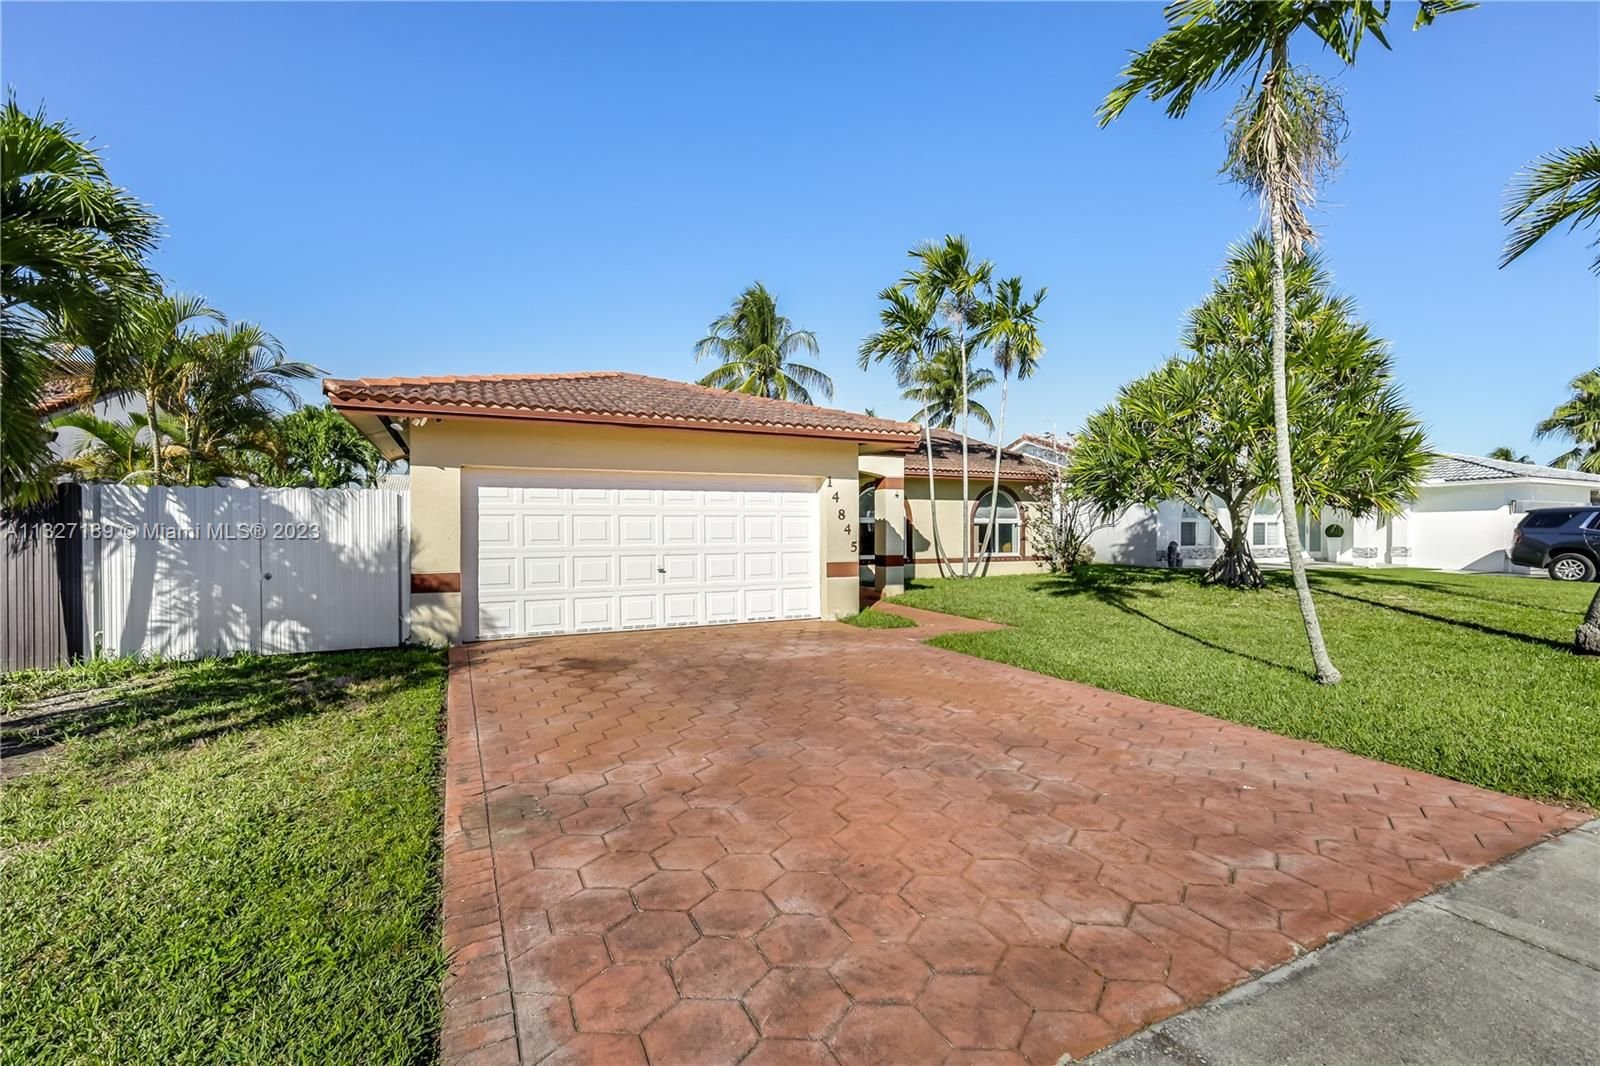 Real estate property located at 14845 174th St, Miami-Dade County, Miami, FL